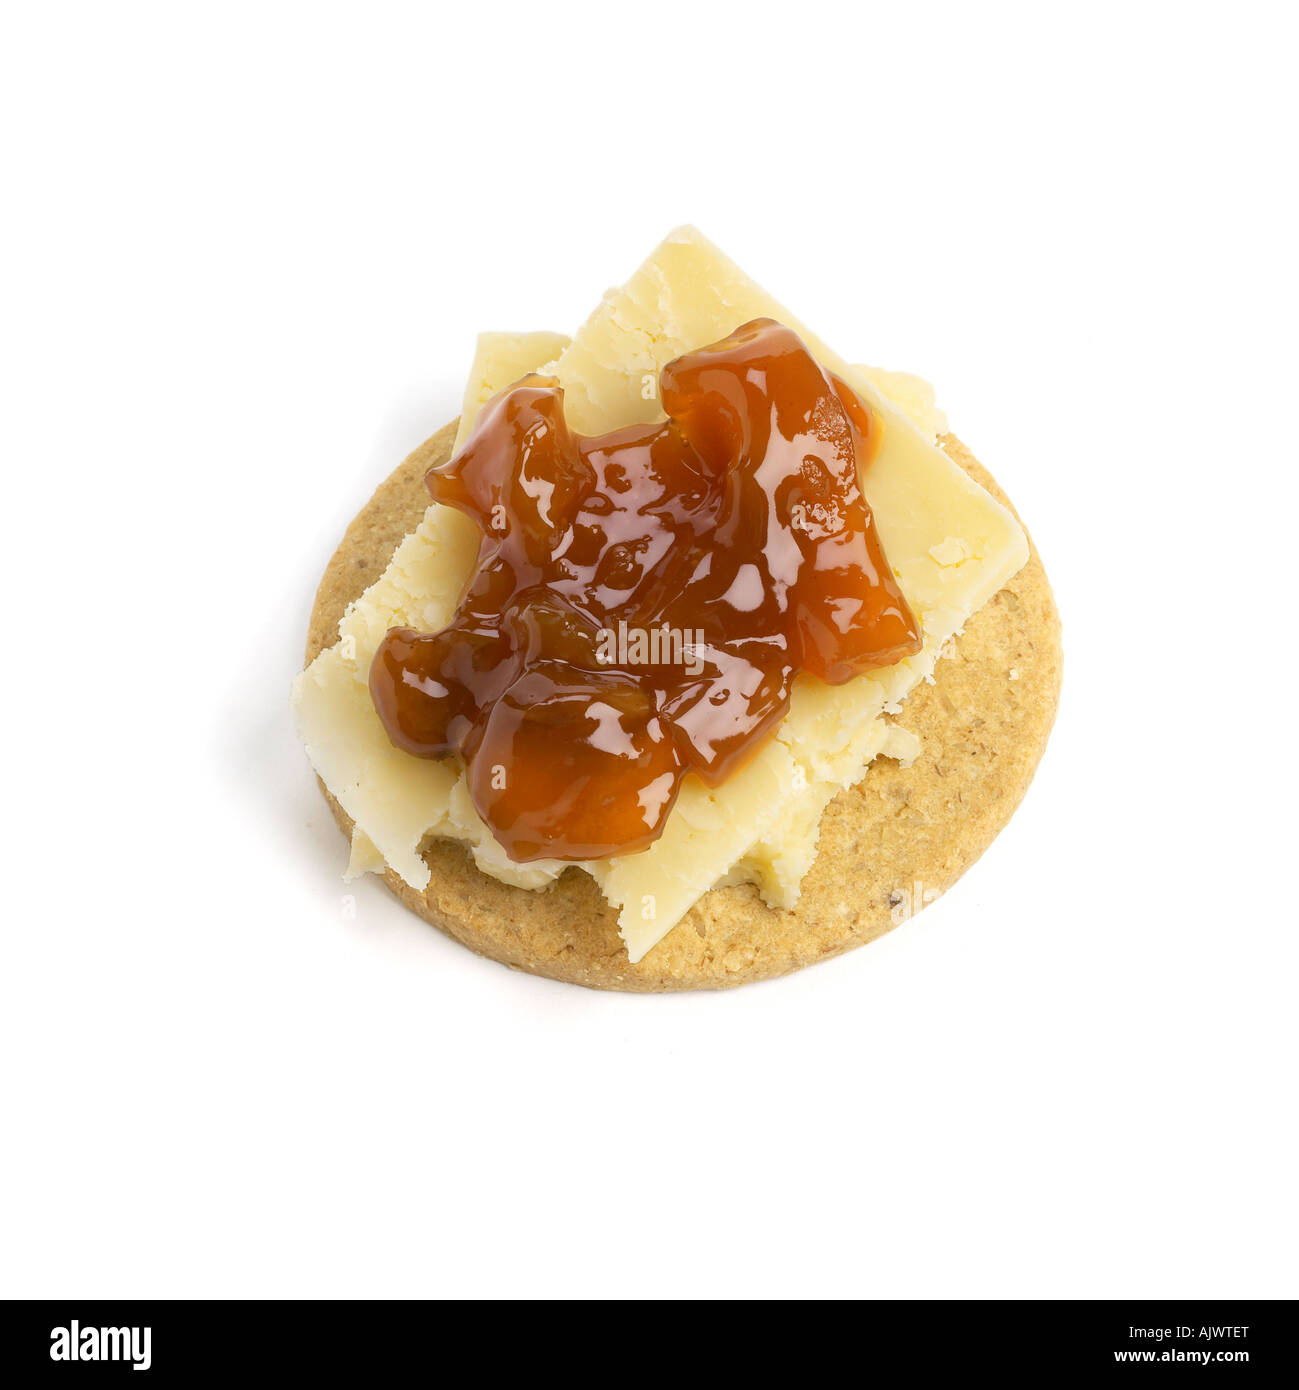 Oatcake with Lancashire Cheese and Apple Chutney Stock Photo